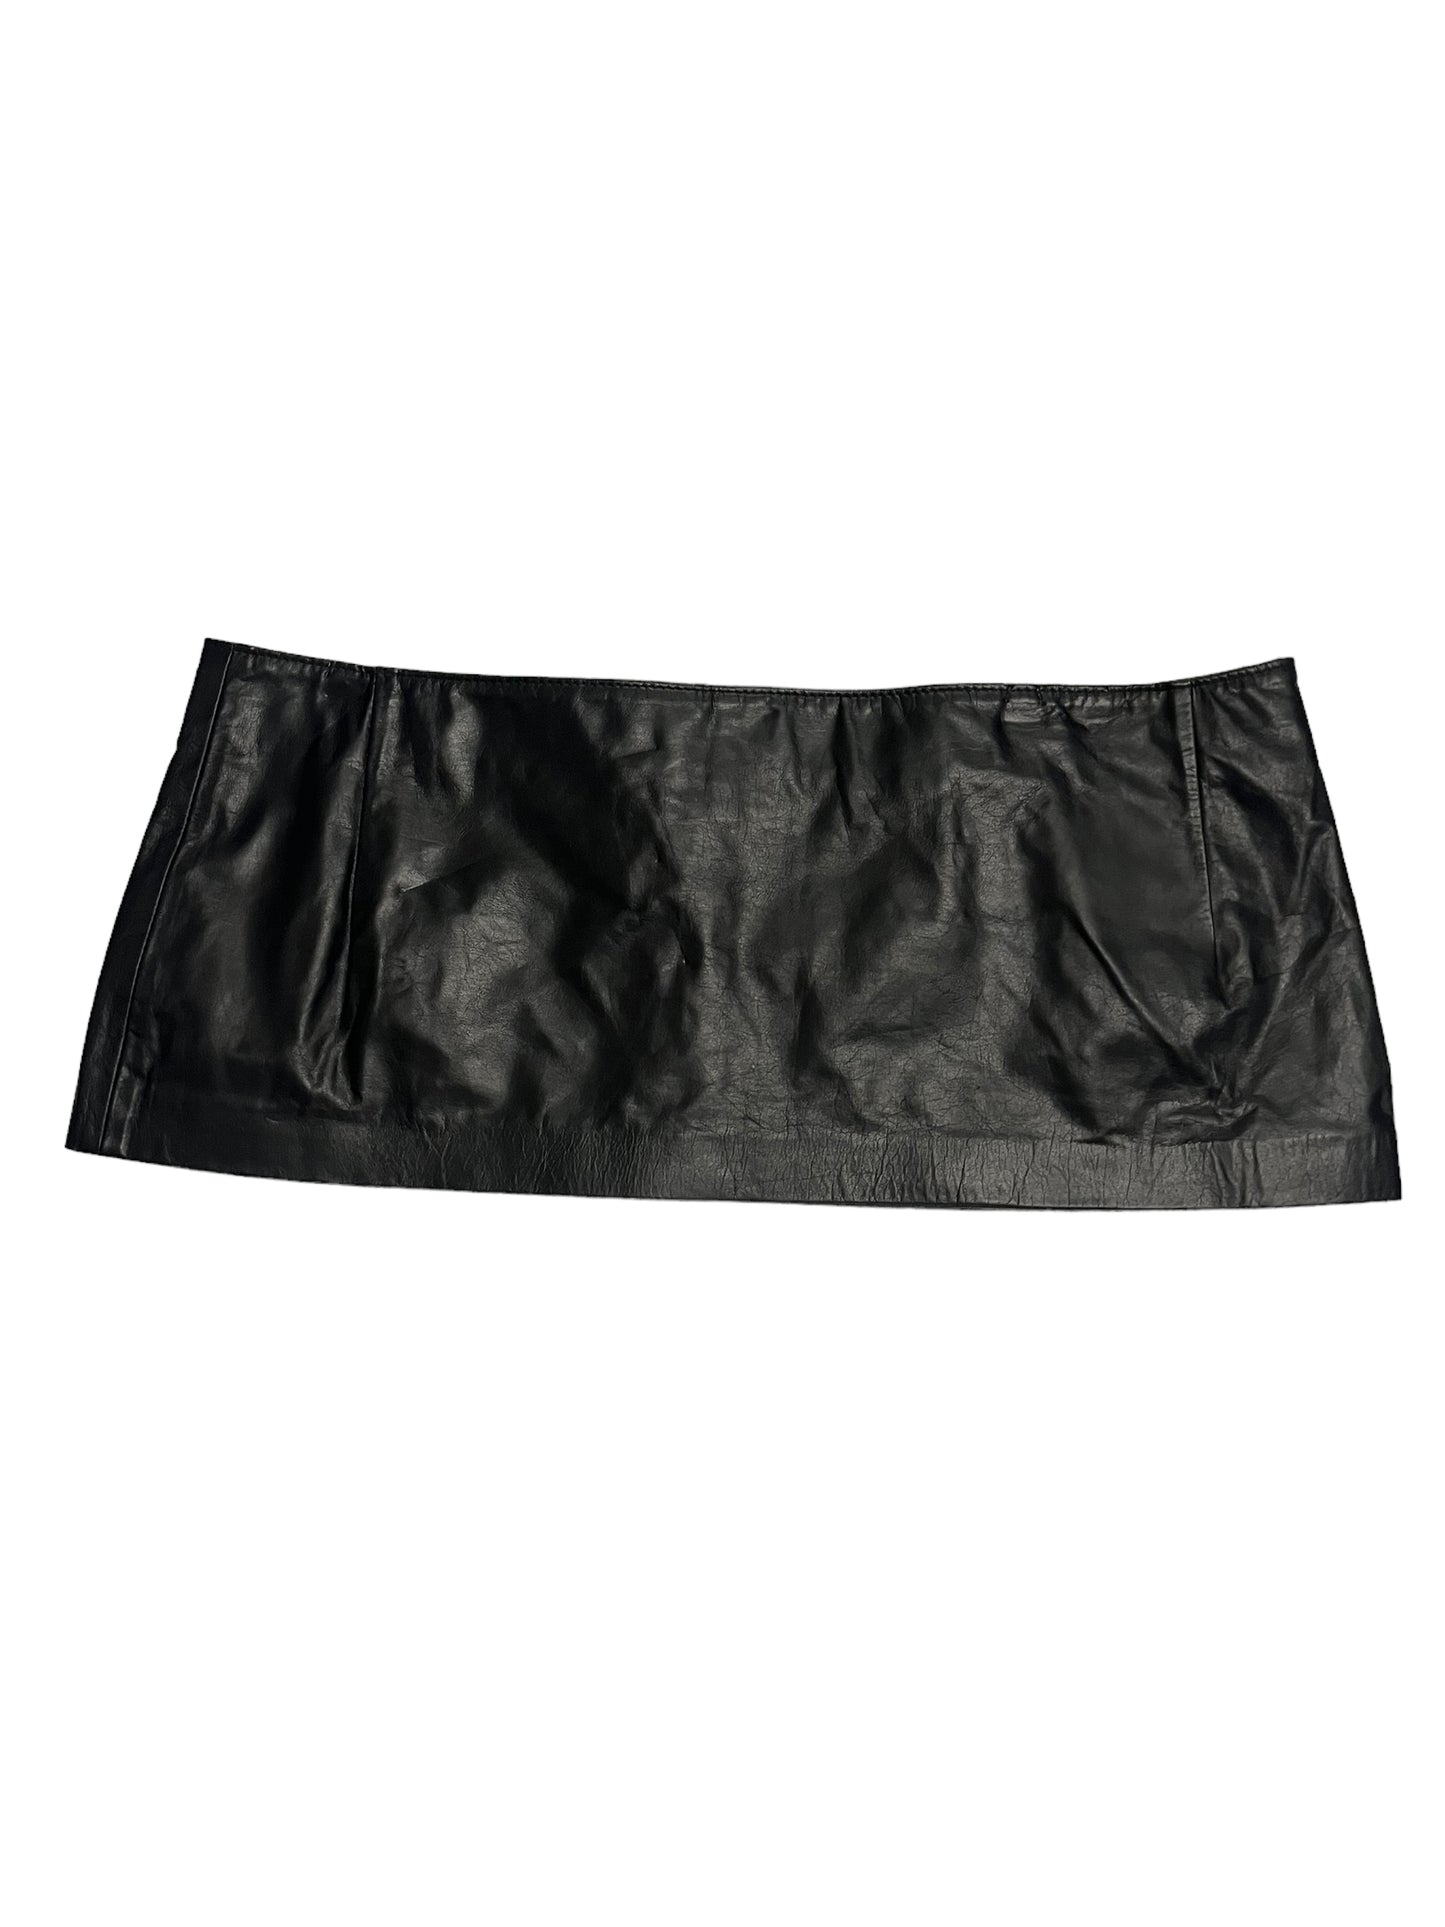 LL86 - Leather Skirt - Size XXL